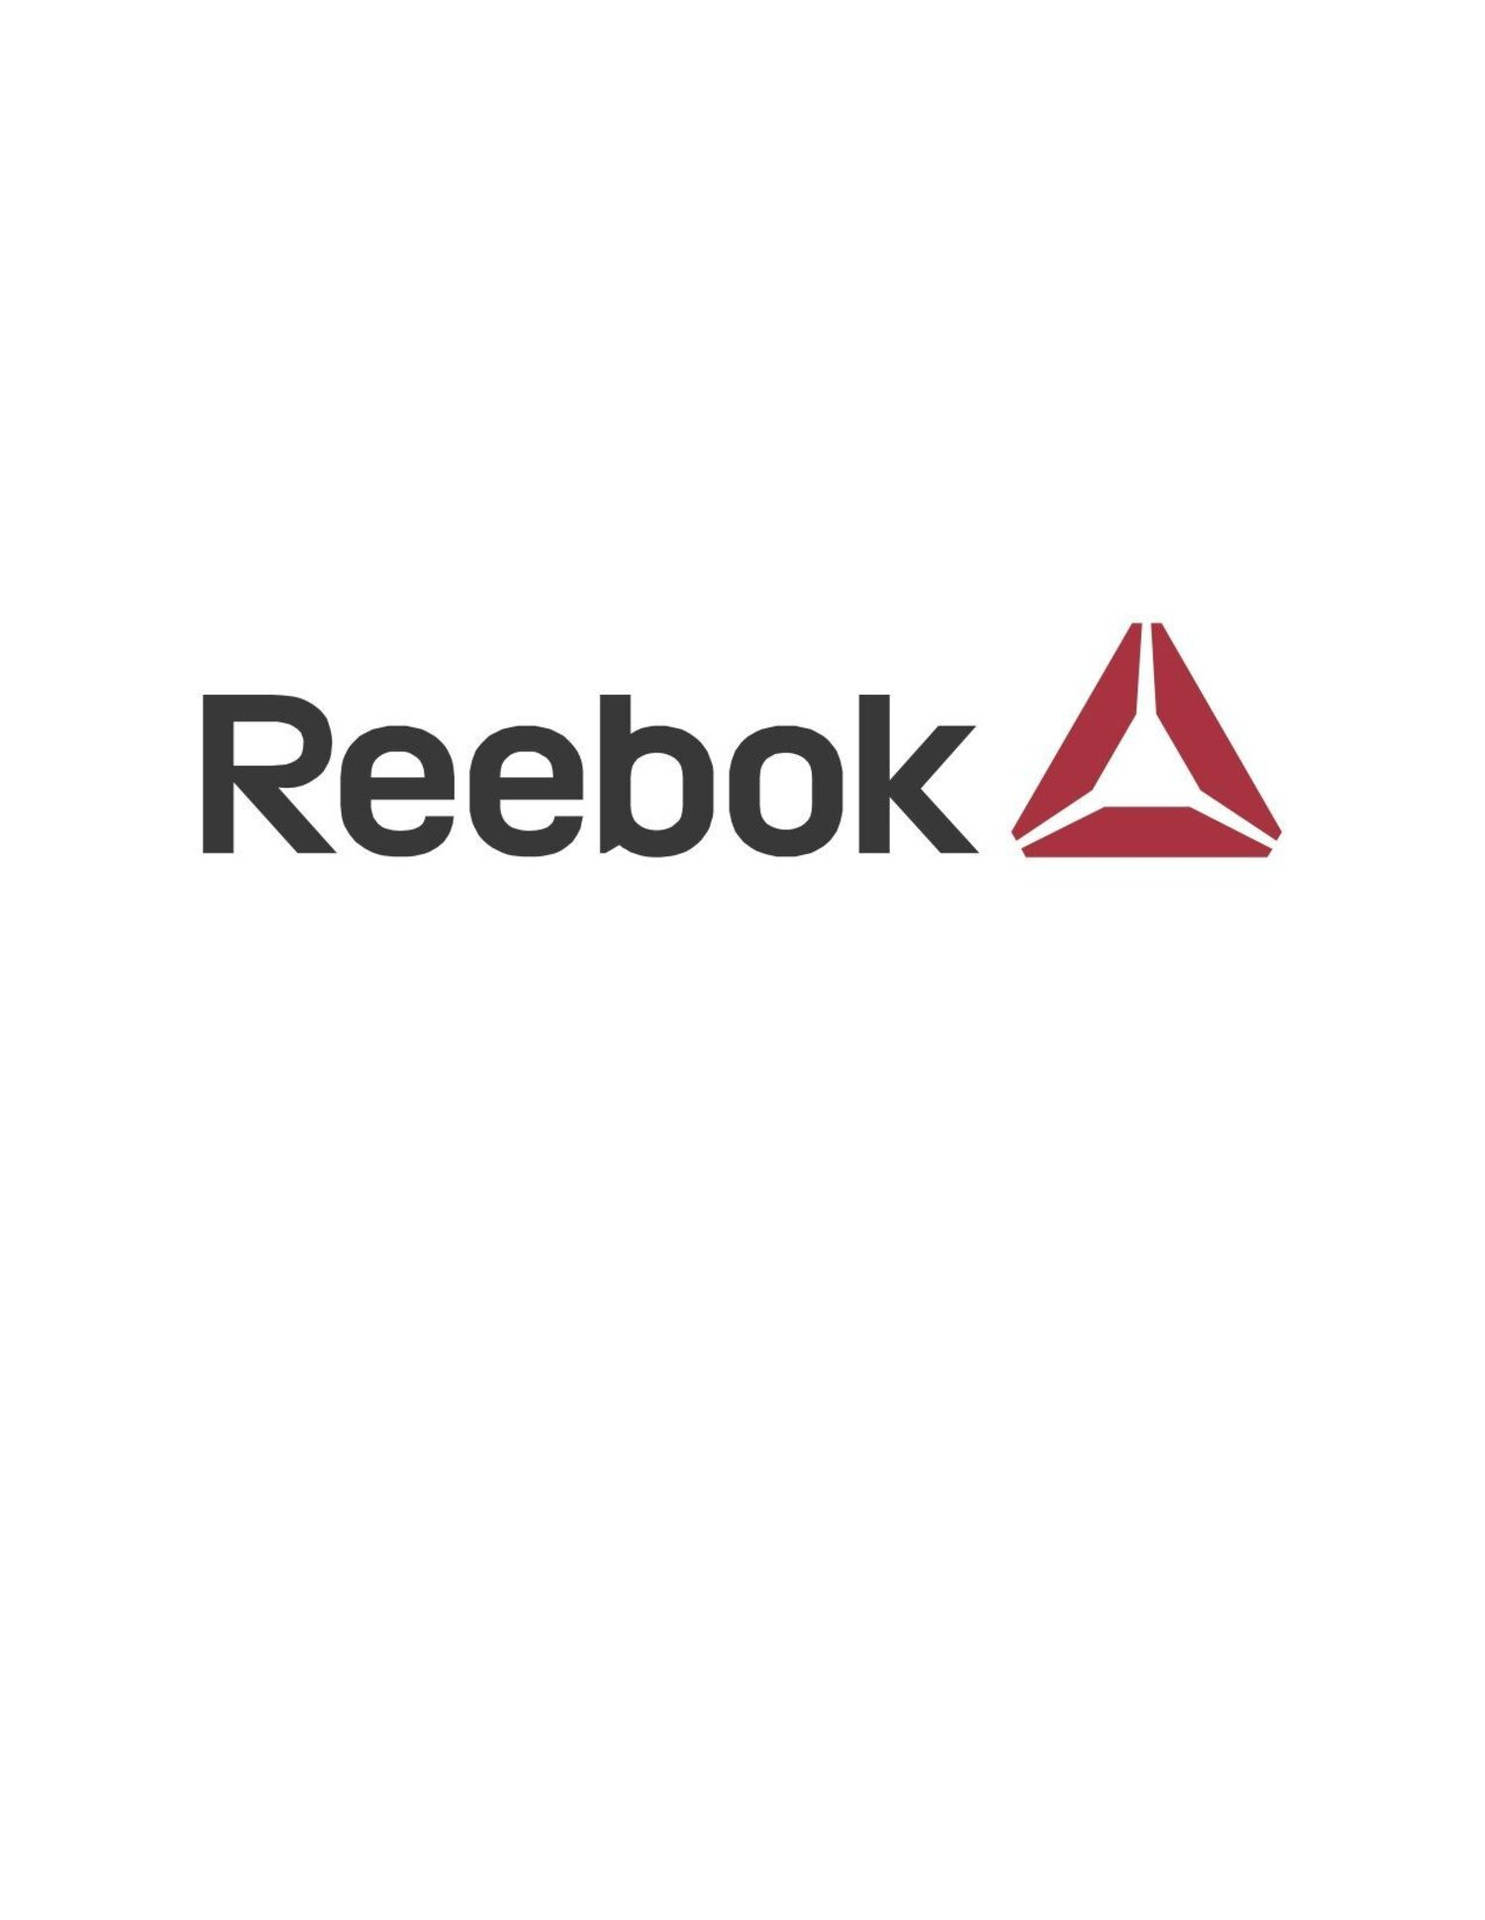 Reebok Delta Logo Phone Background